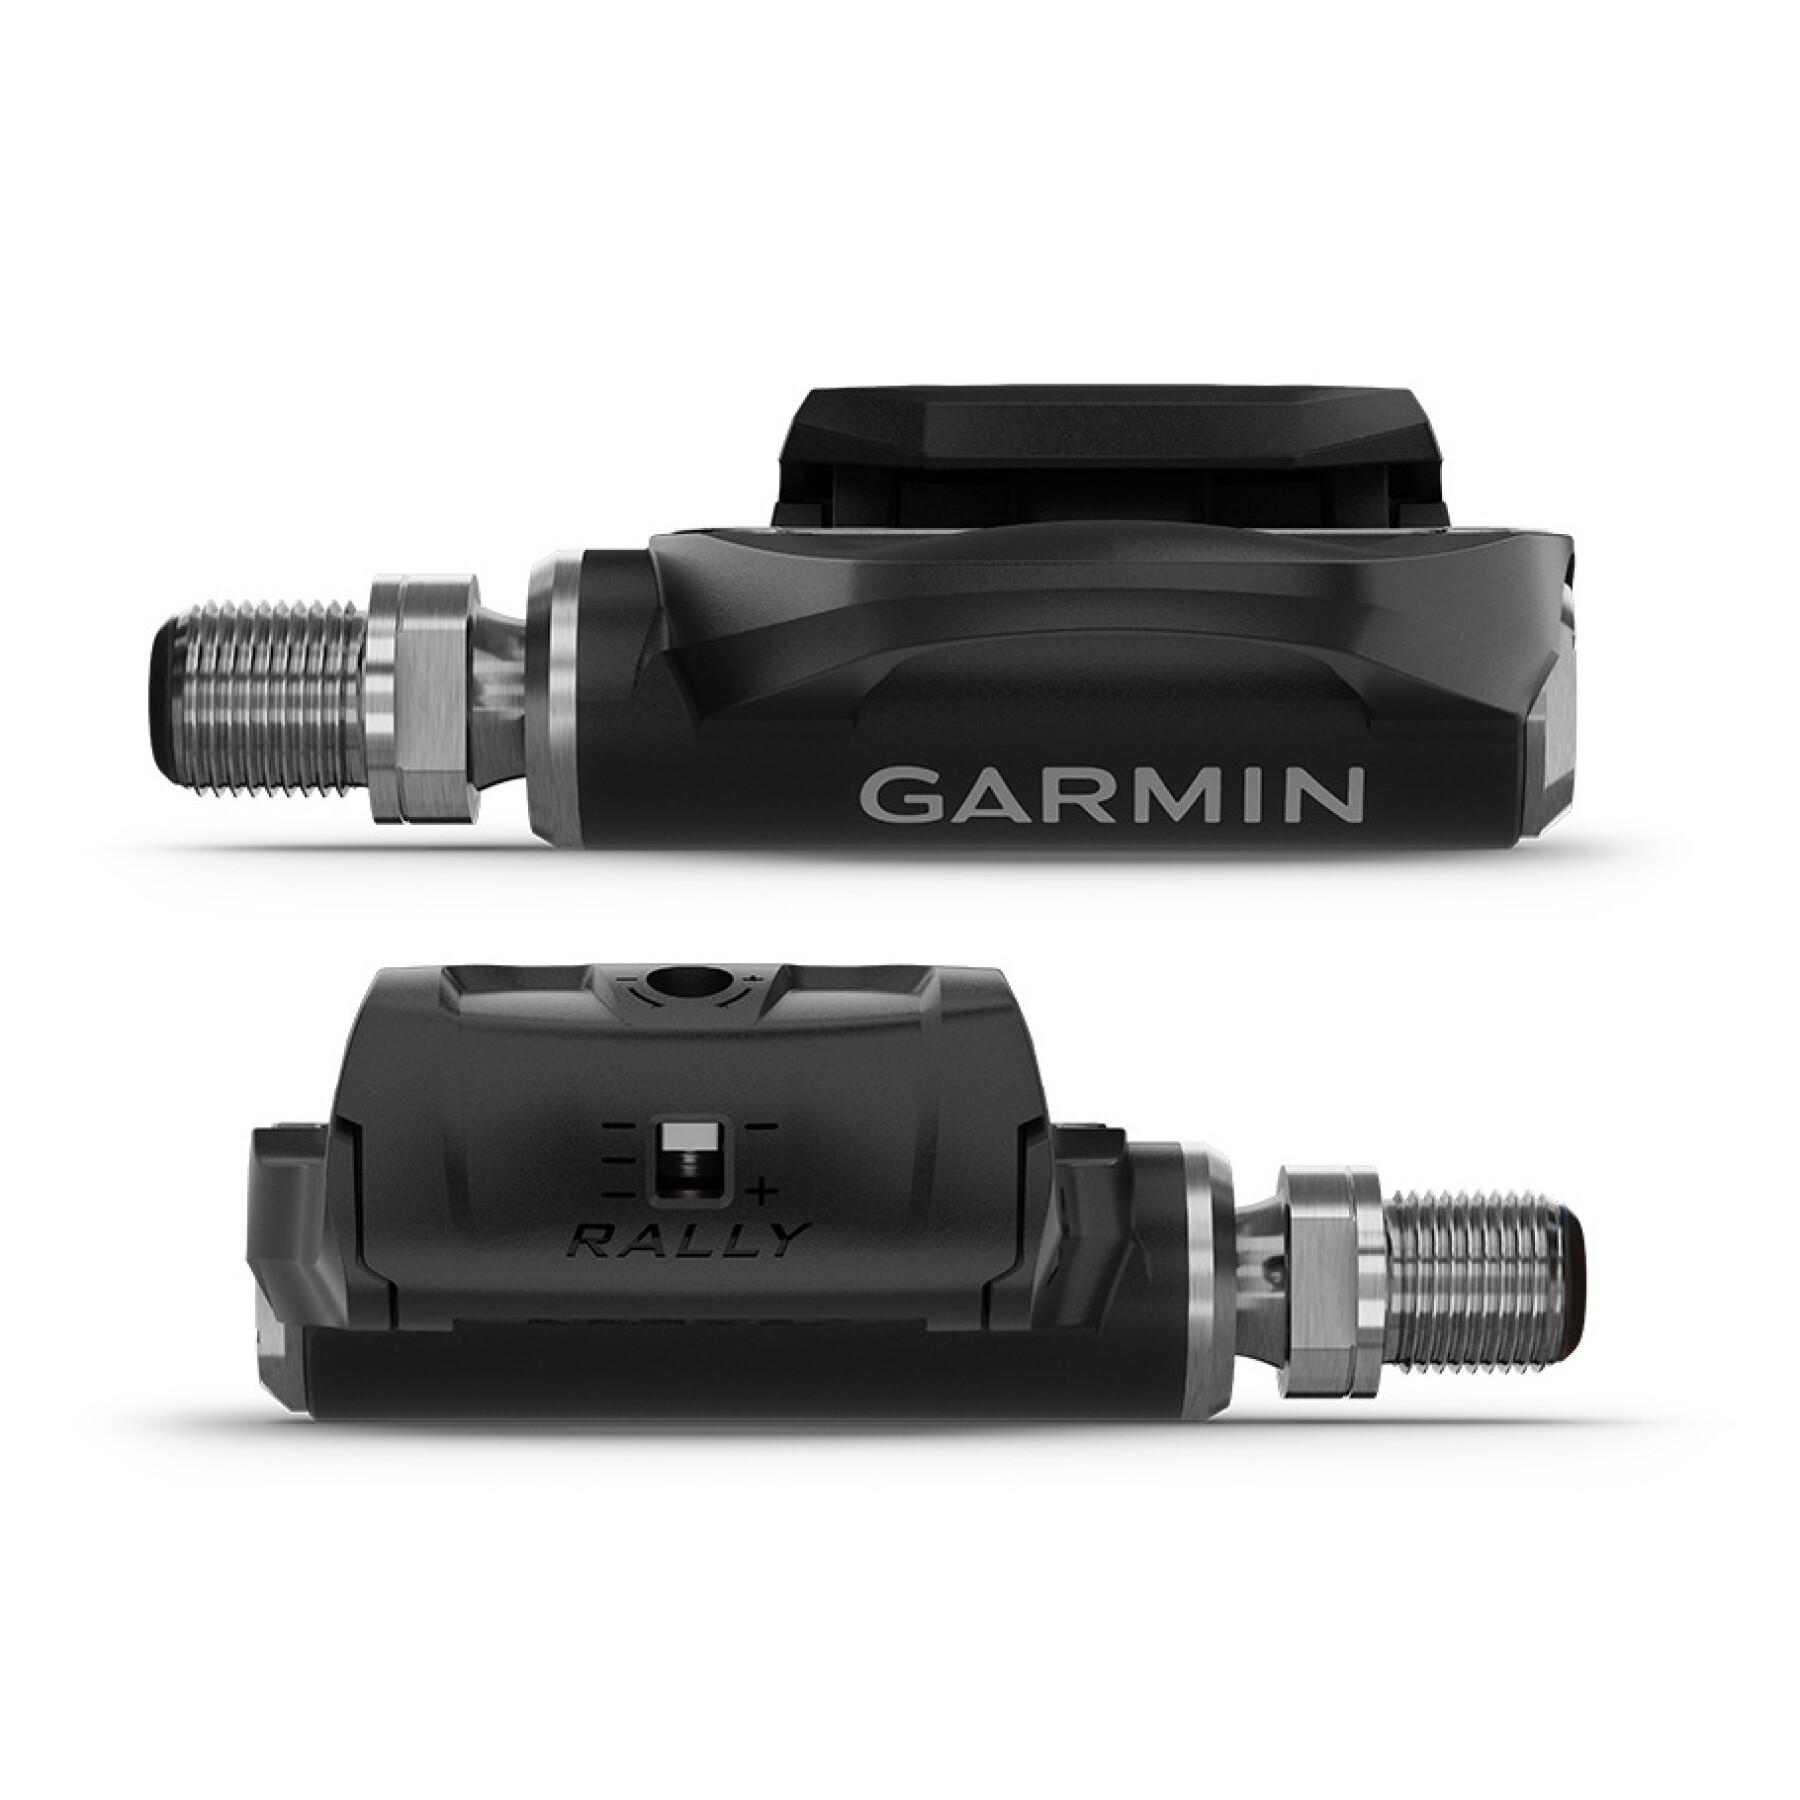 Power sensor Garmin Rally rs 100 shimano spd-sl type